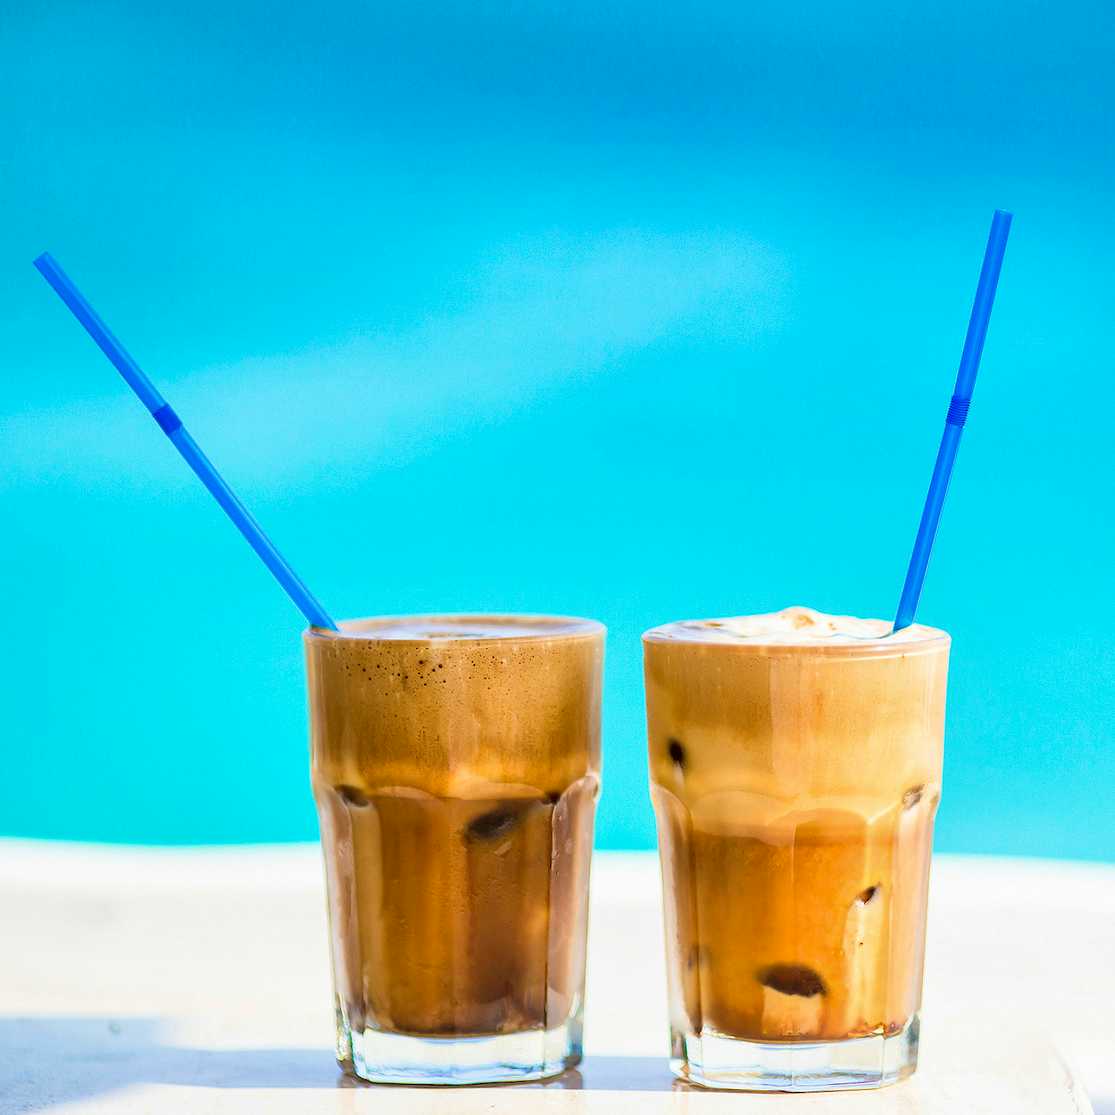 Photo Caption: Απολαύστε έναν δροσιστικό παγωμένο καφέ δίπλα στη πισίνα